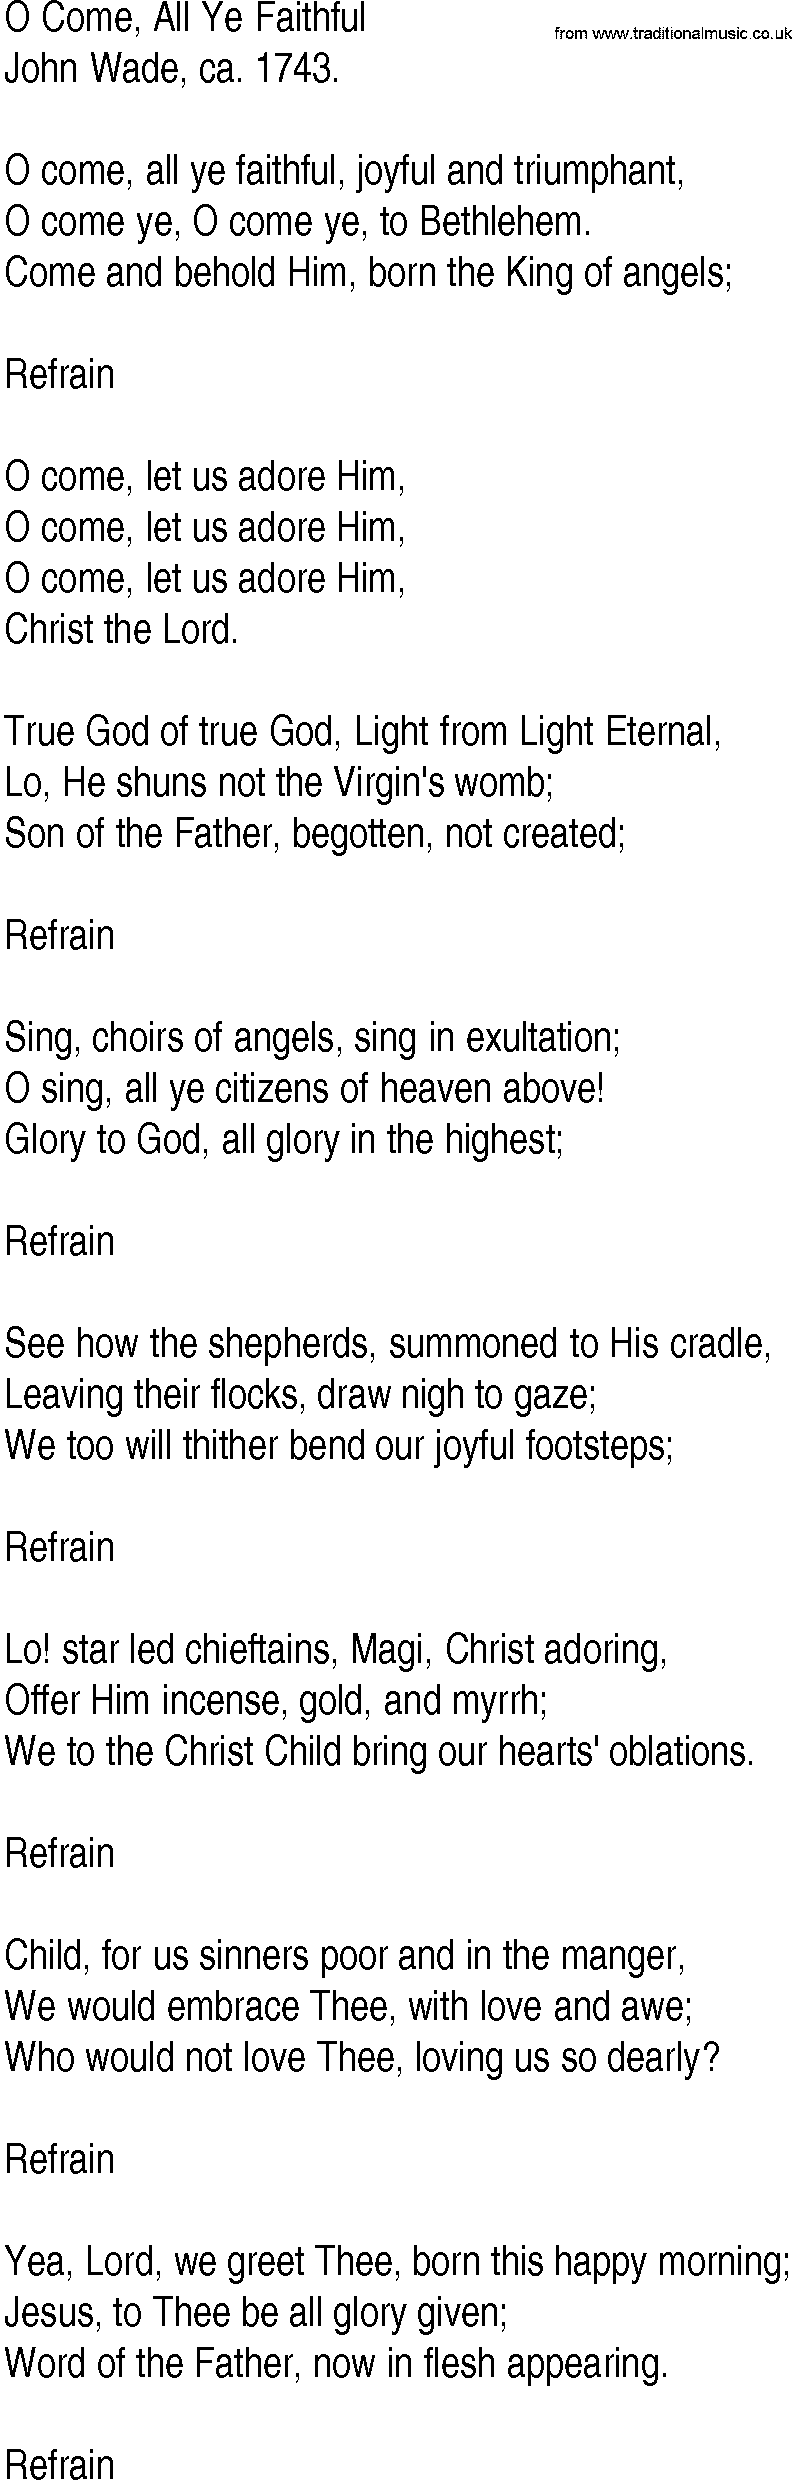 Hymn and Gospel Song: O Come, All Ye Faithful by John Wade ca lyrics